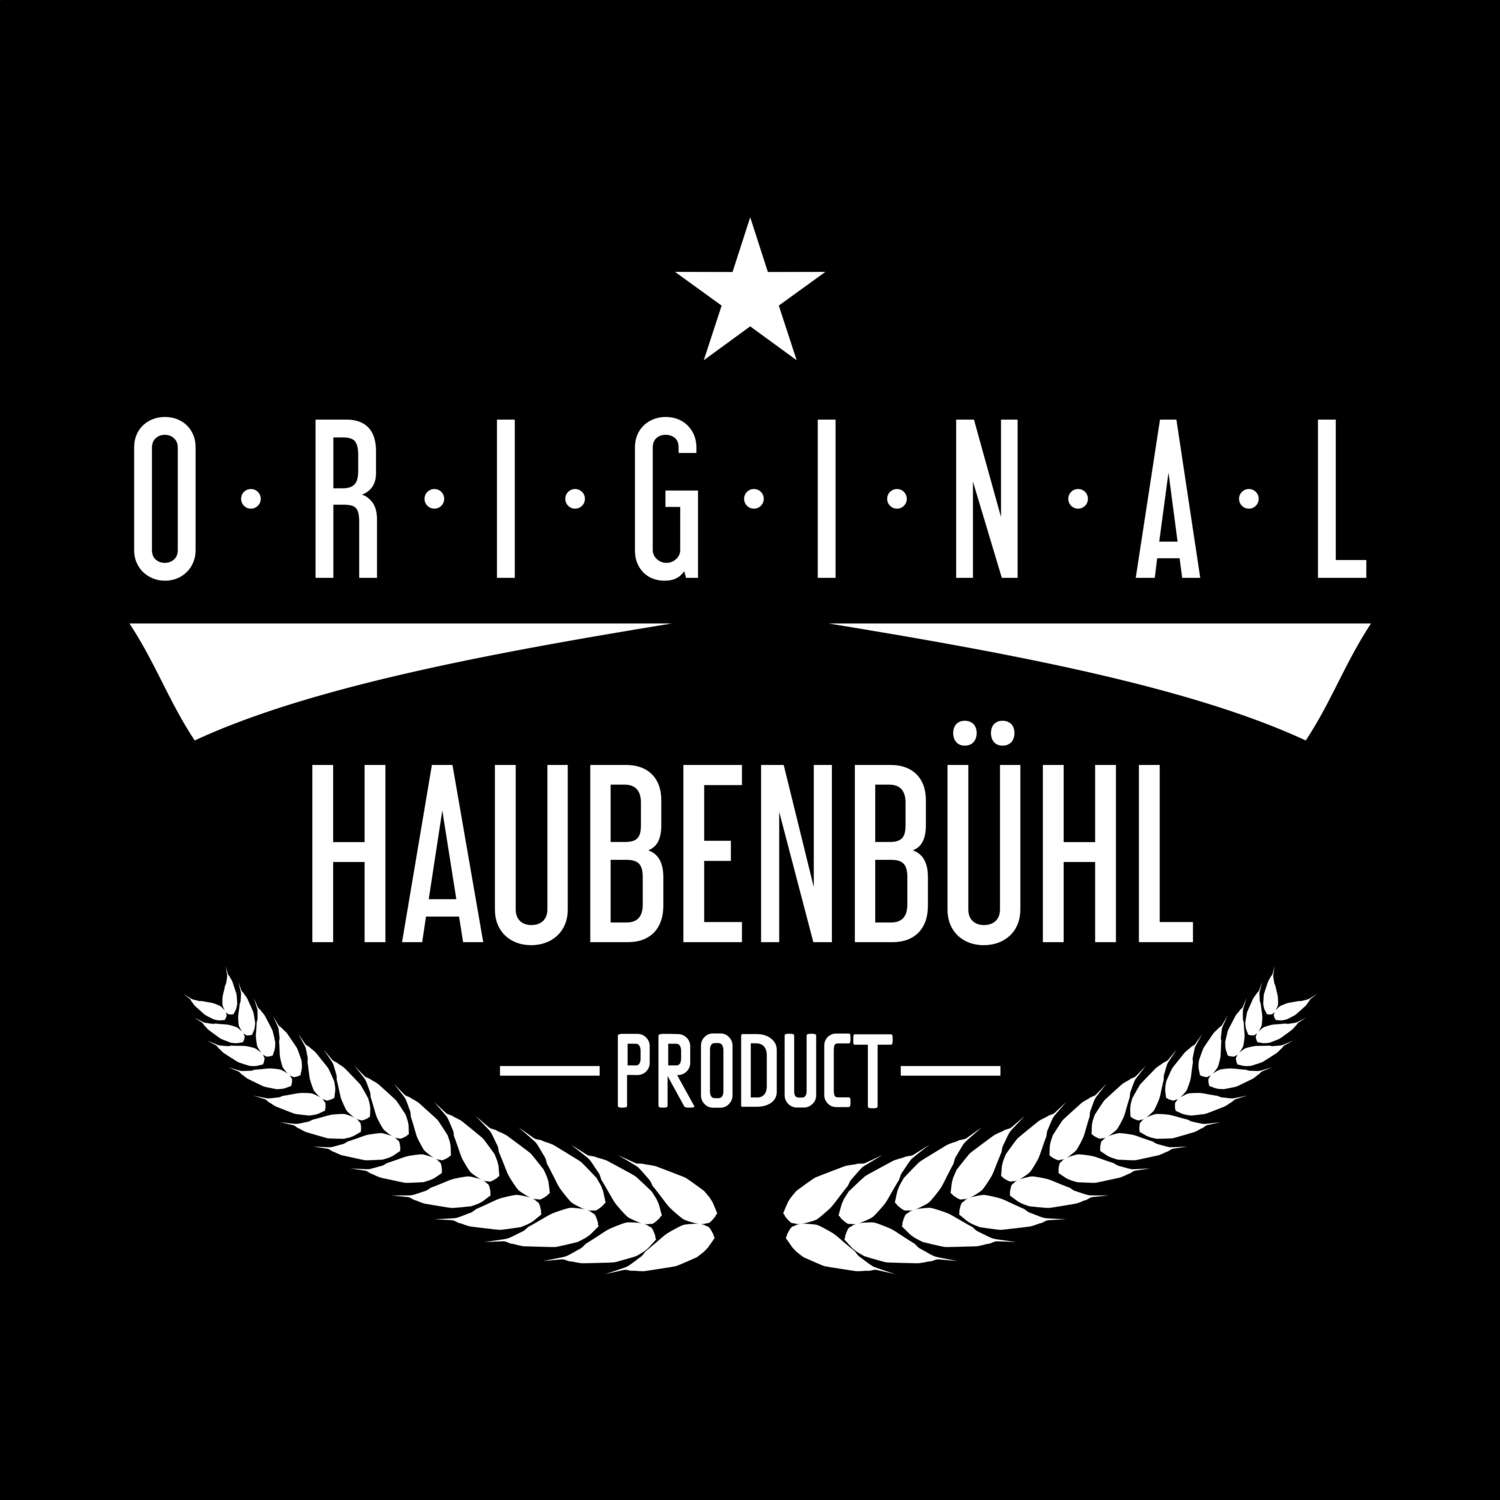 Haubenbühl T-Shirt »Original Product«